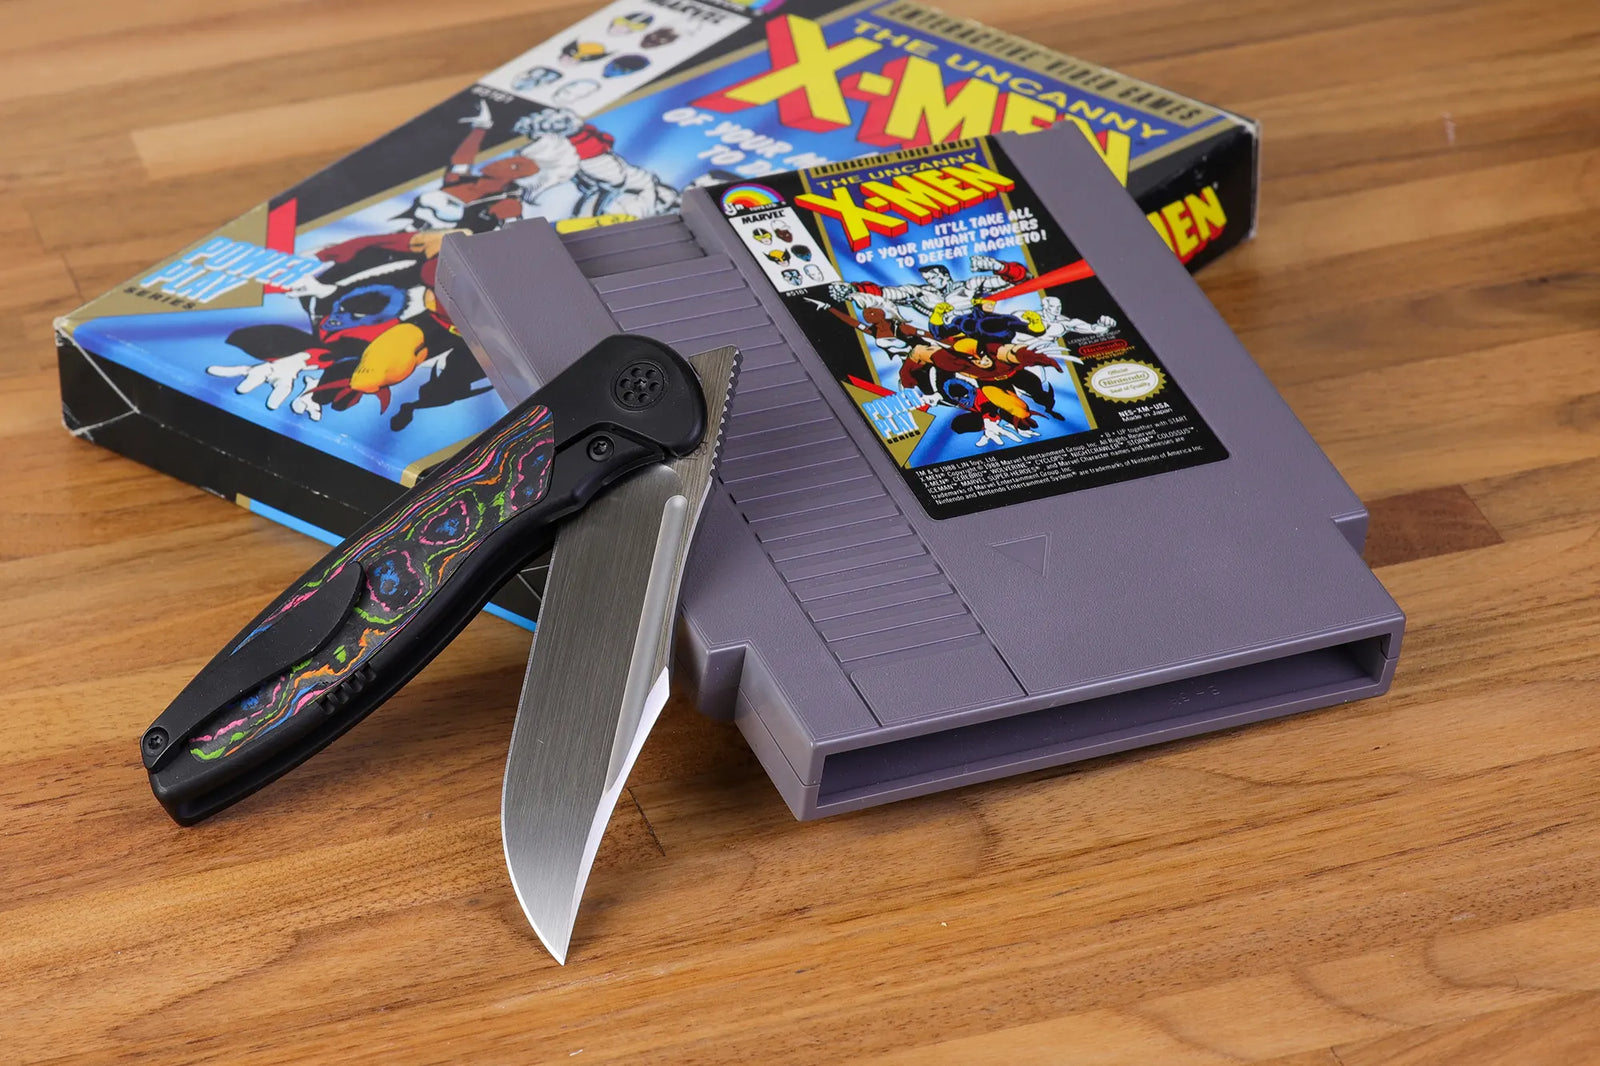 Kaviso x Sharp by Designs Mini Tempest S90V Folding Pocket Knife in 80's Camo Carbon Carbon Fiber eighties with X-Men Nintendo Game